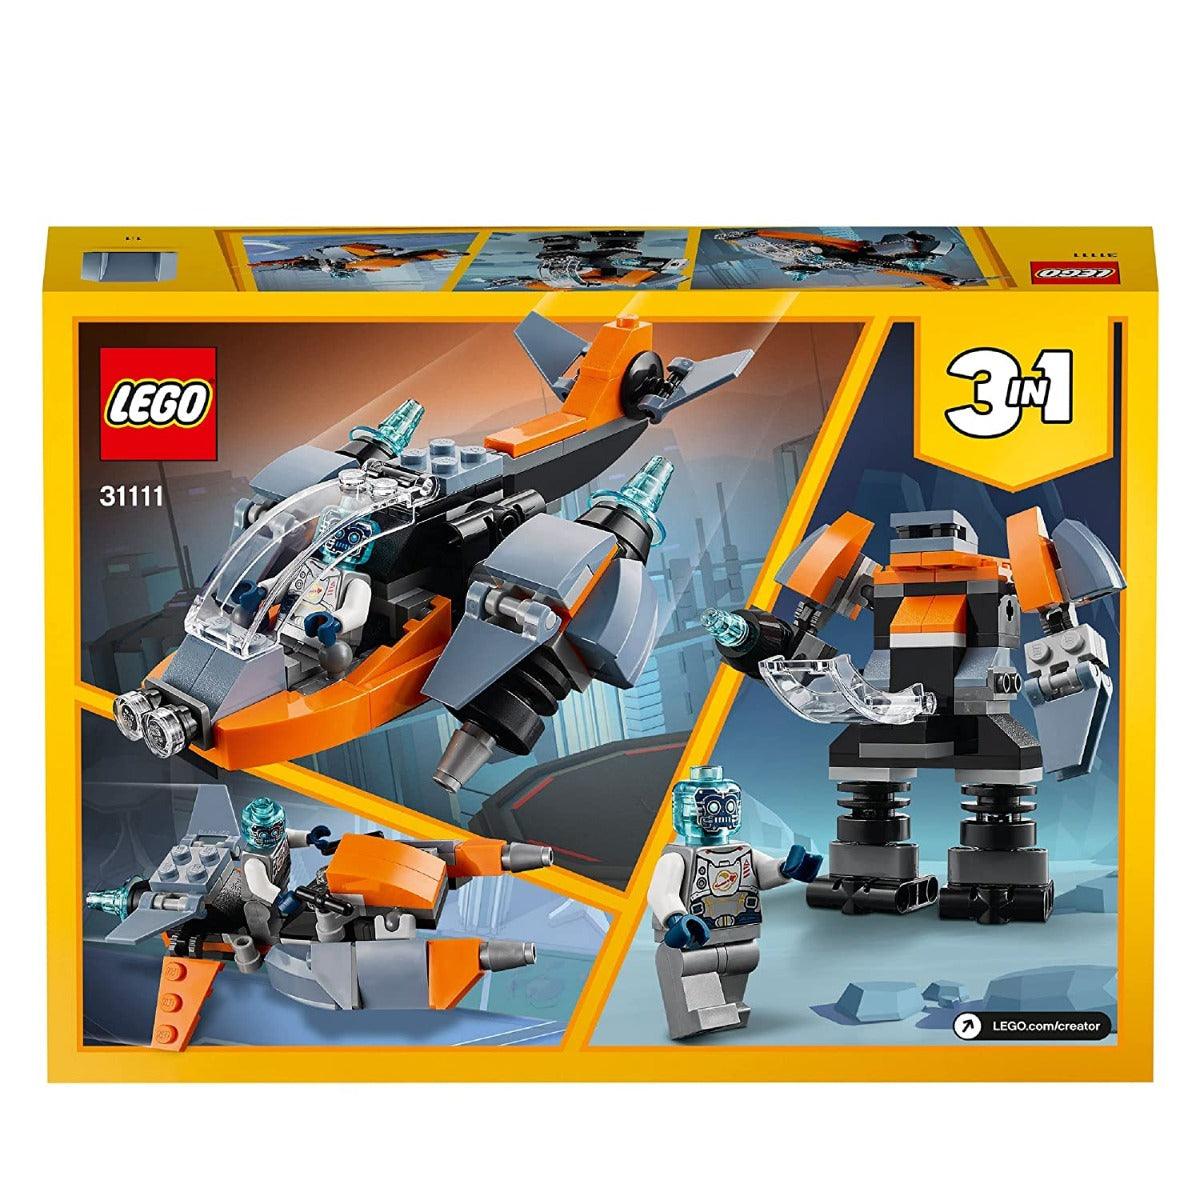 LEGO Creator 3-in-1 31134 Space Shuttle - Brick Store NZ